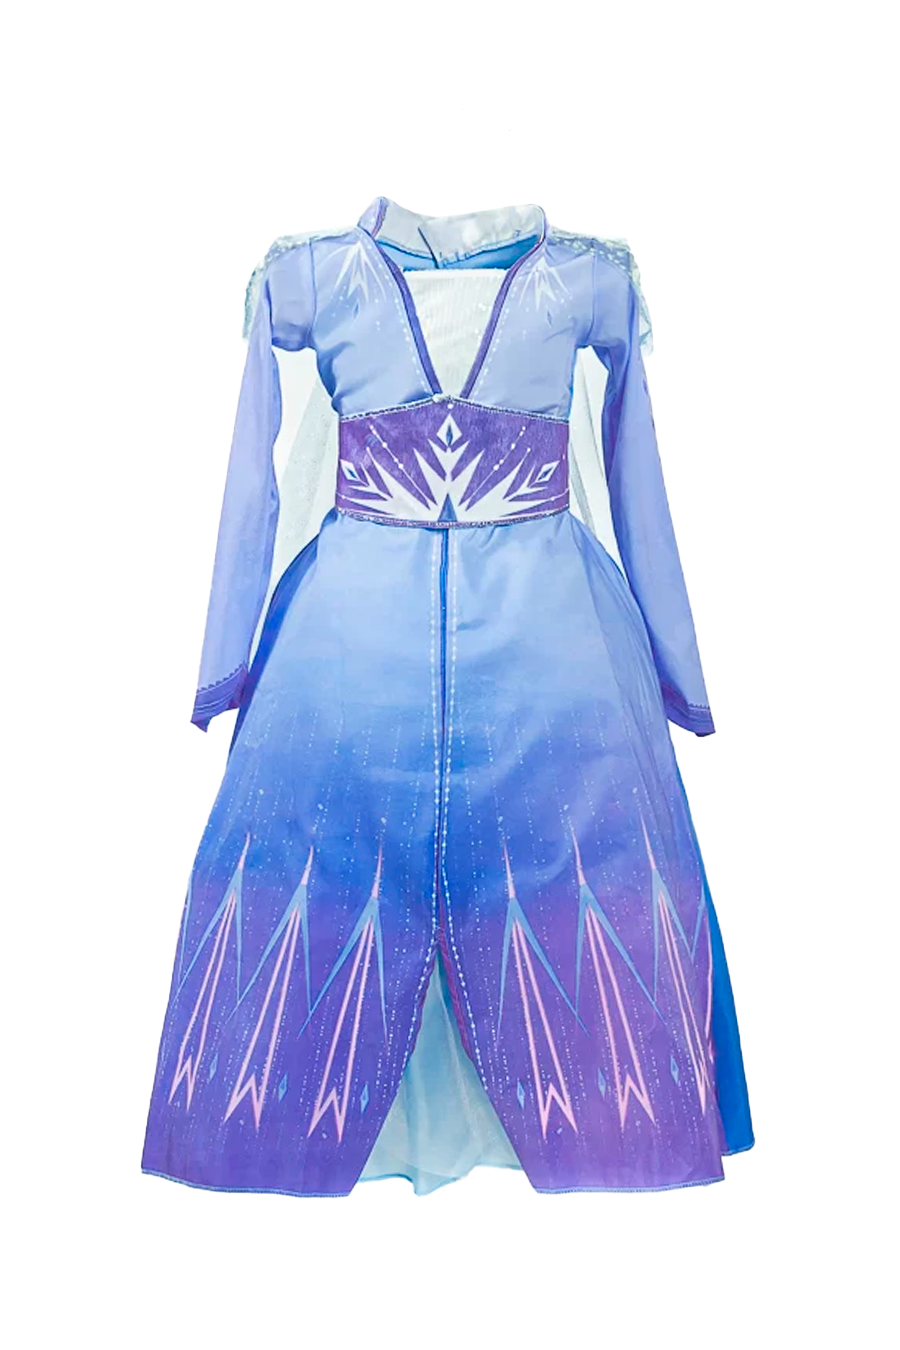 Vestido Fantasia Infantil Elsa Frozen 2 Emfantasy 3010